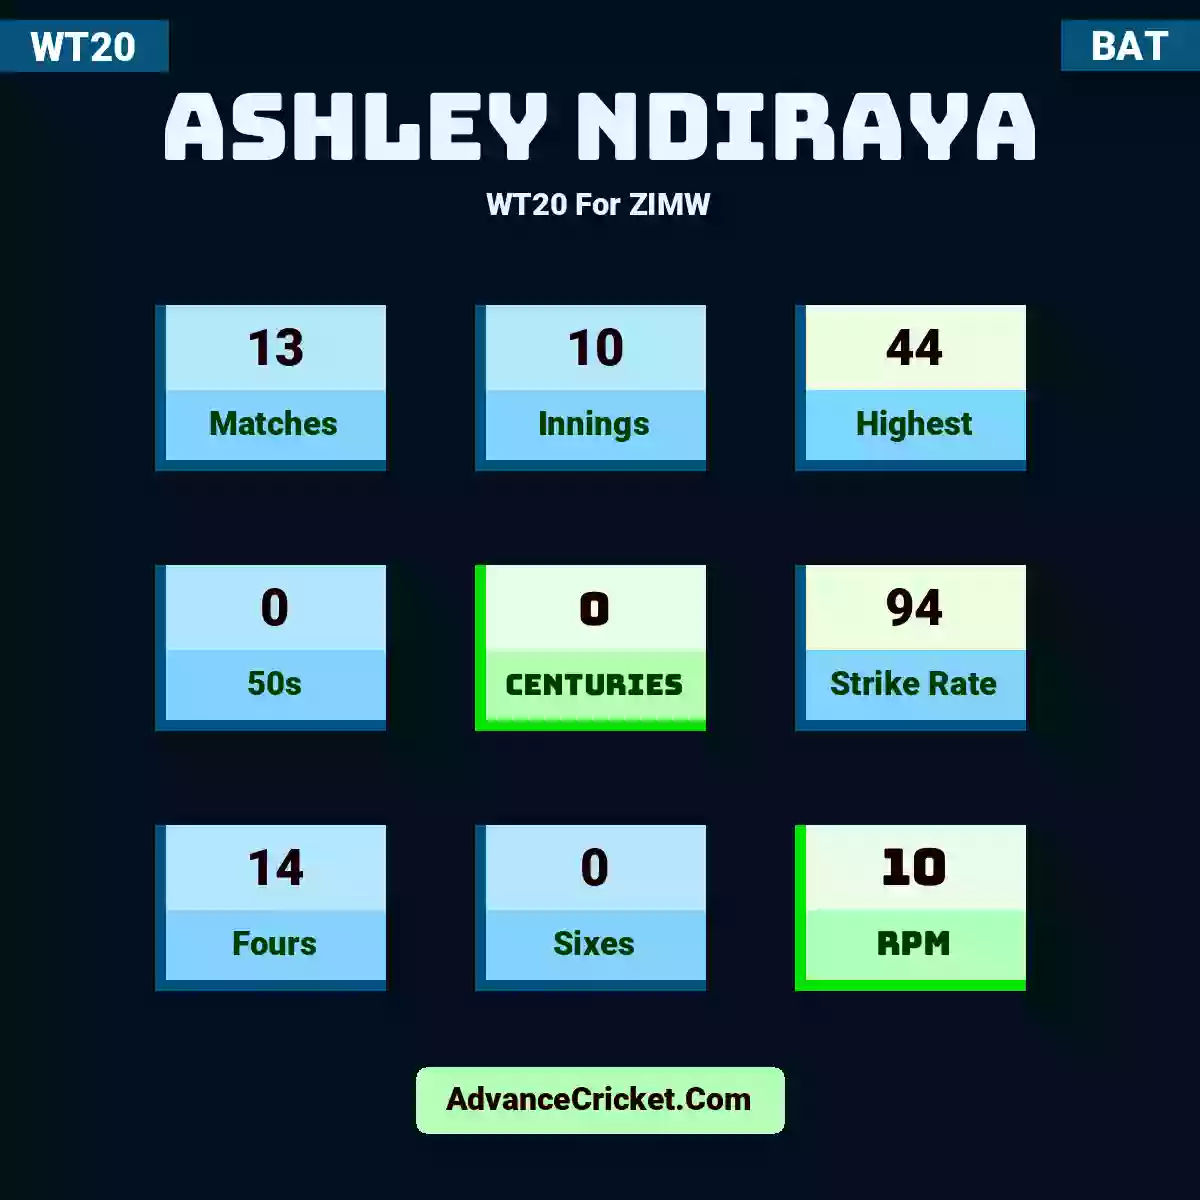 Ashley Ndiraya WT20  For ZIMW, Ashley Ndiraya played 13 matches, scored 44 runs as highest, 0 half-centuries, and 0 centuries, with a strike rate of 94. A.Ndiraya hit 14 fours and 0 sixes, with an RPM of 10.